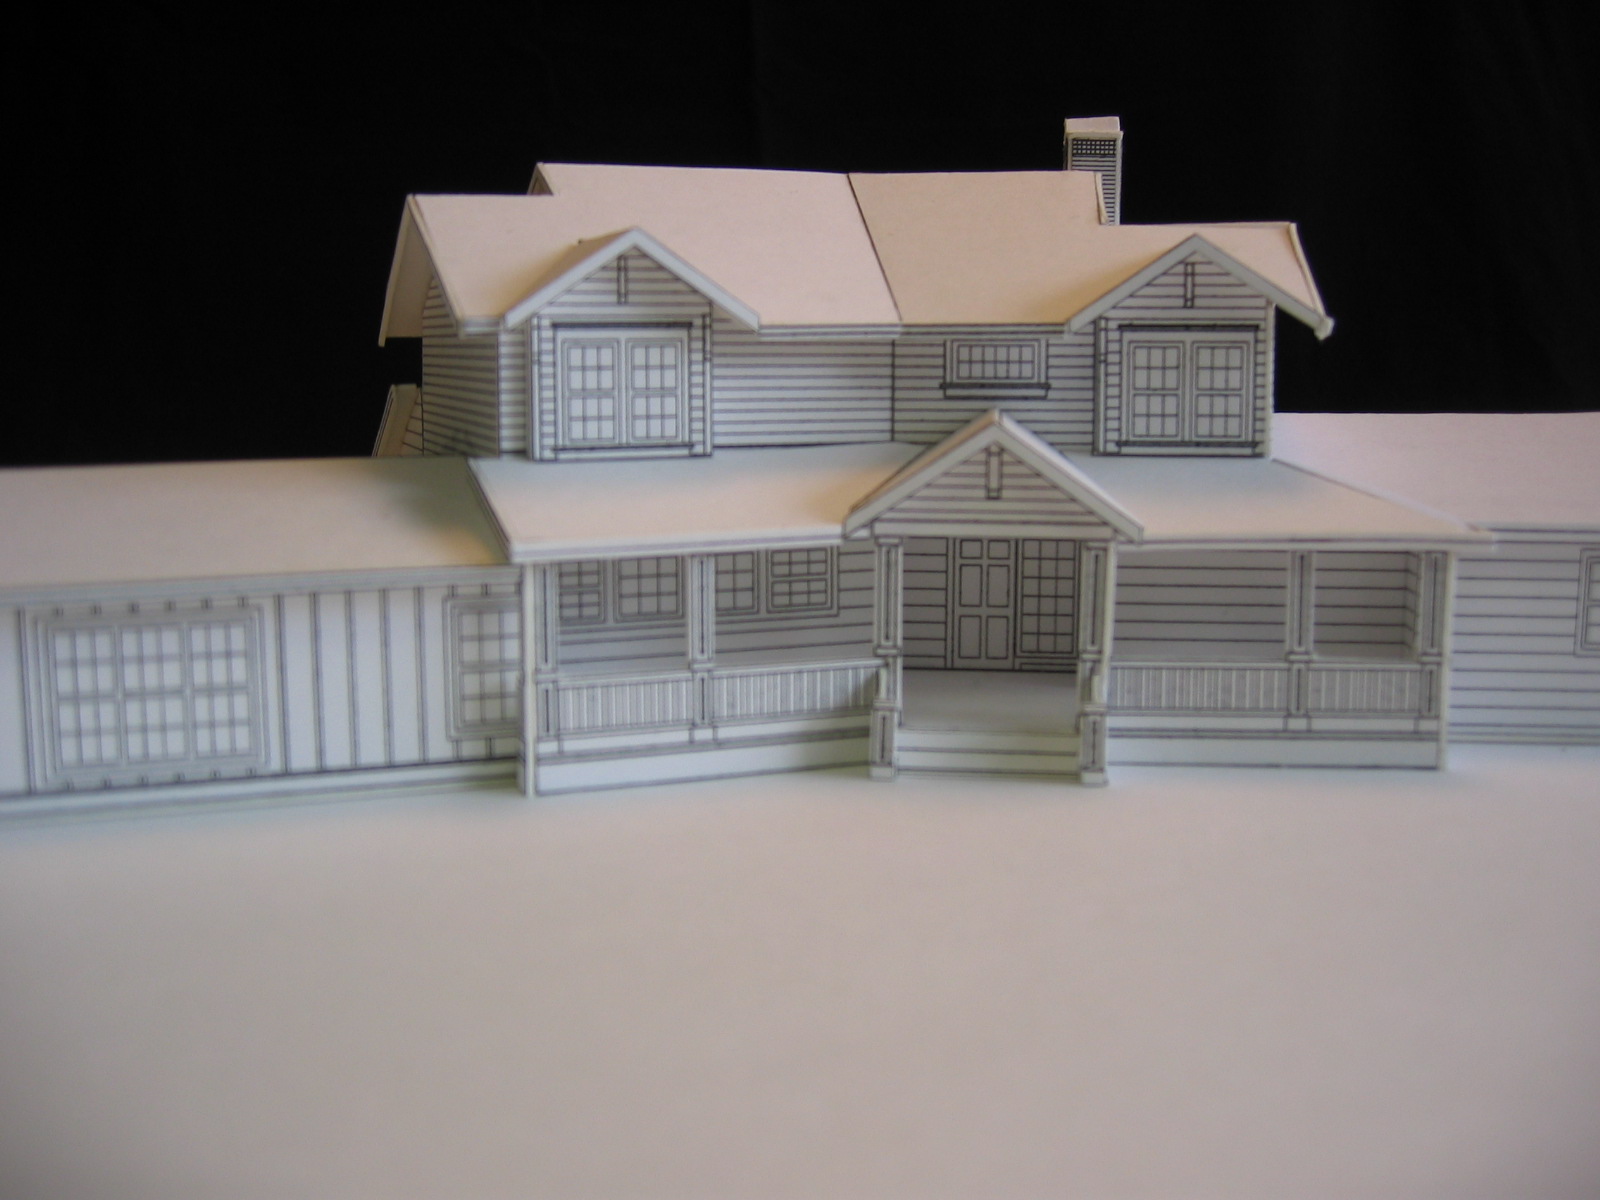 conceptual architectural models